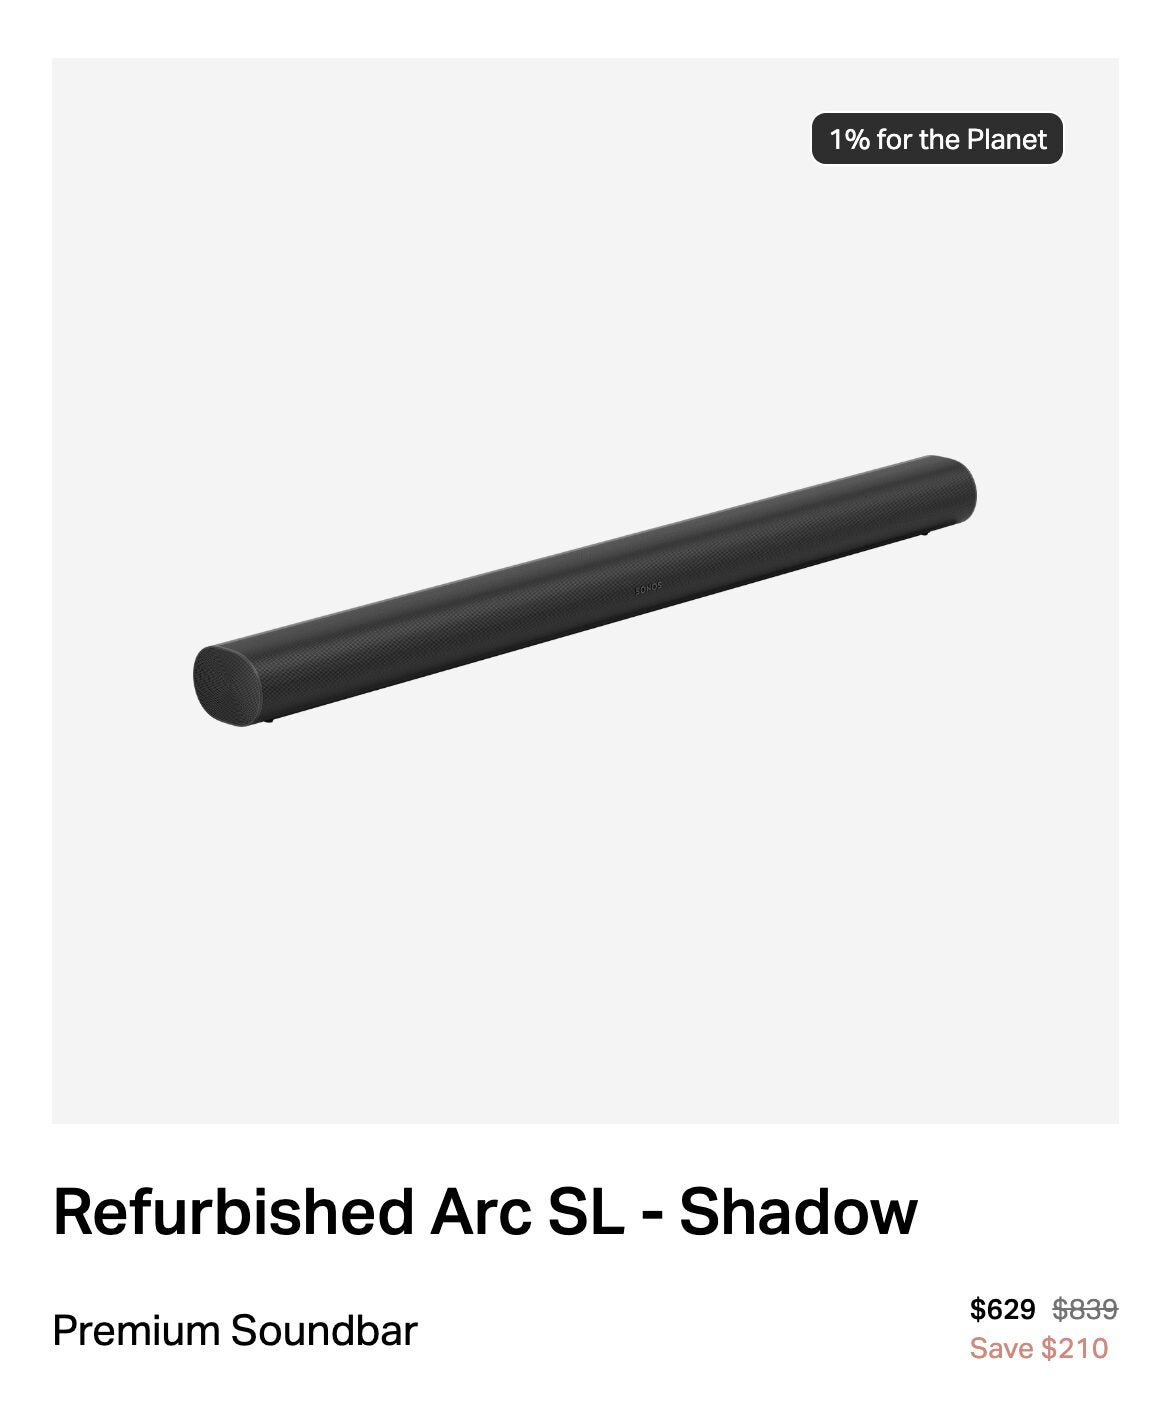 Arc SL: The Premium Soundbar (Refurbished)